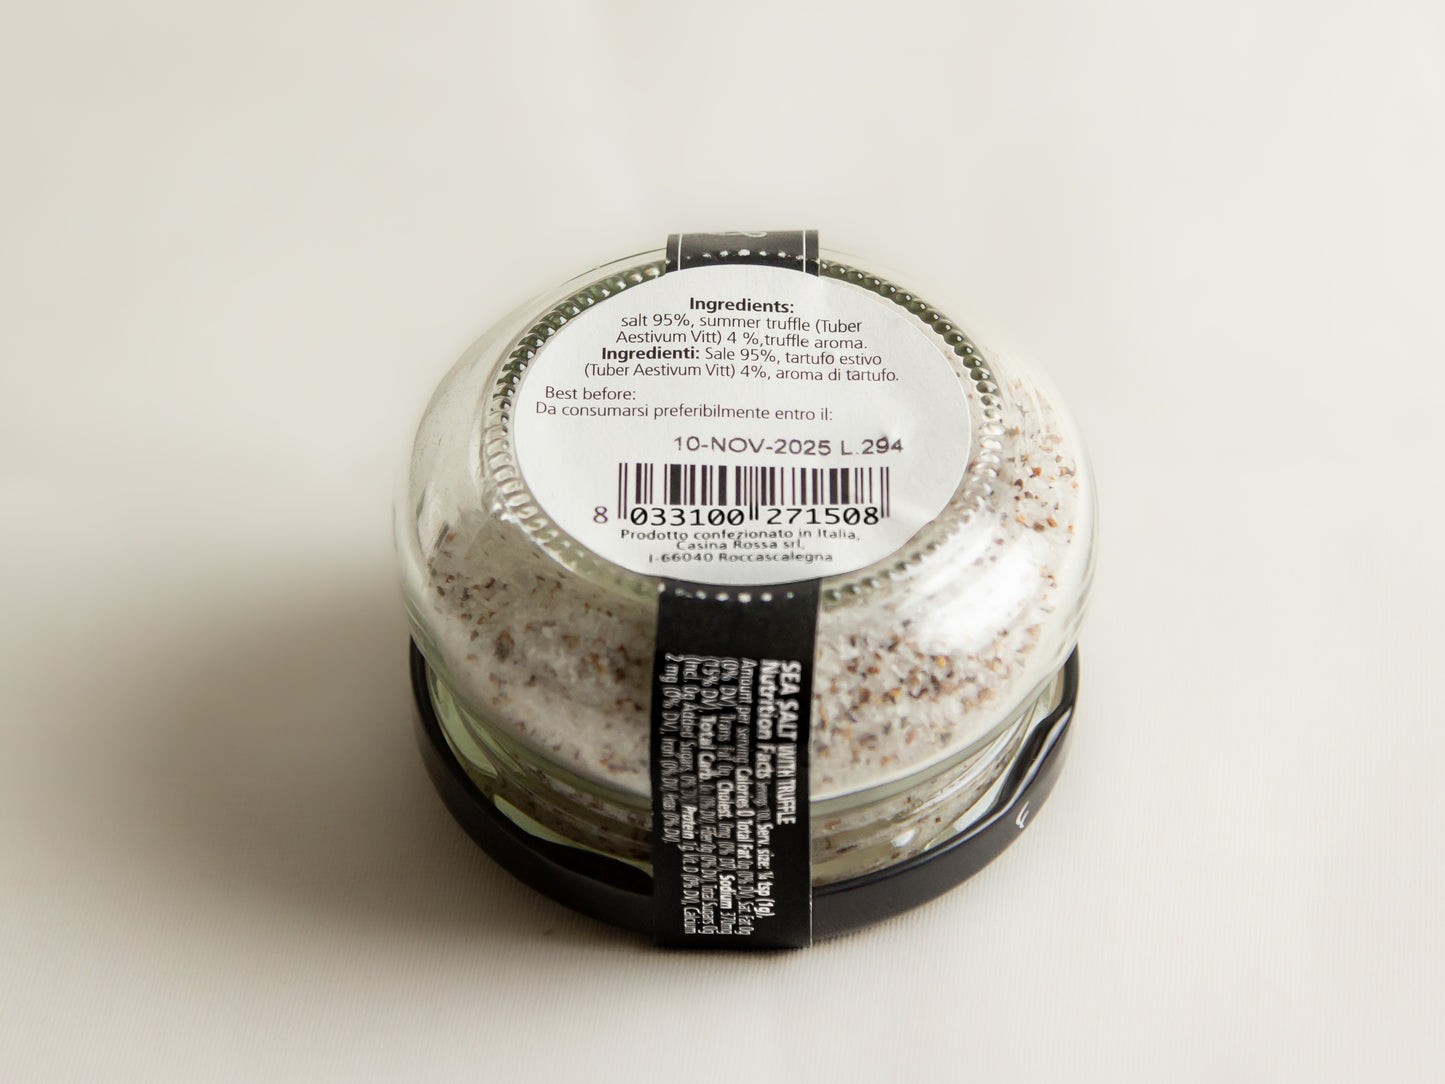 Jar of Casina Rossa Truffle Salt Ingredients